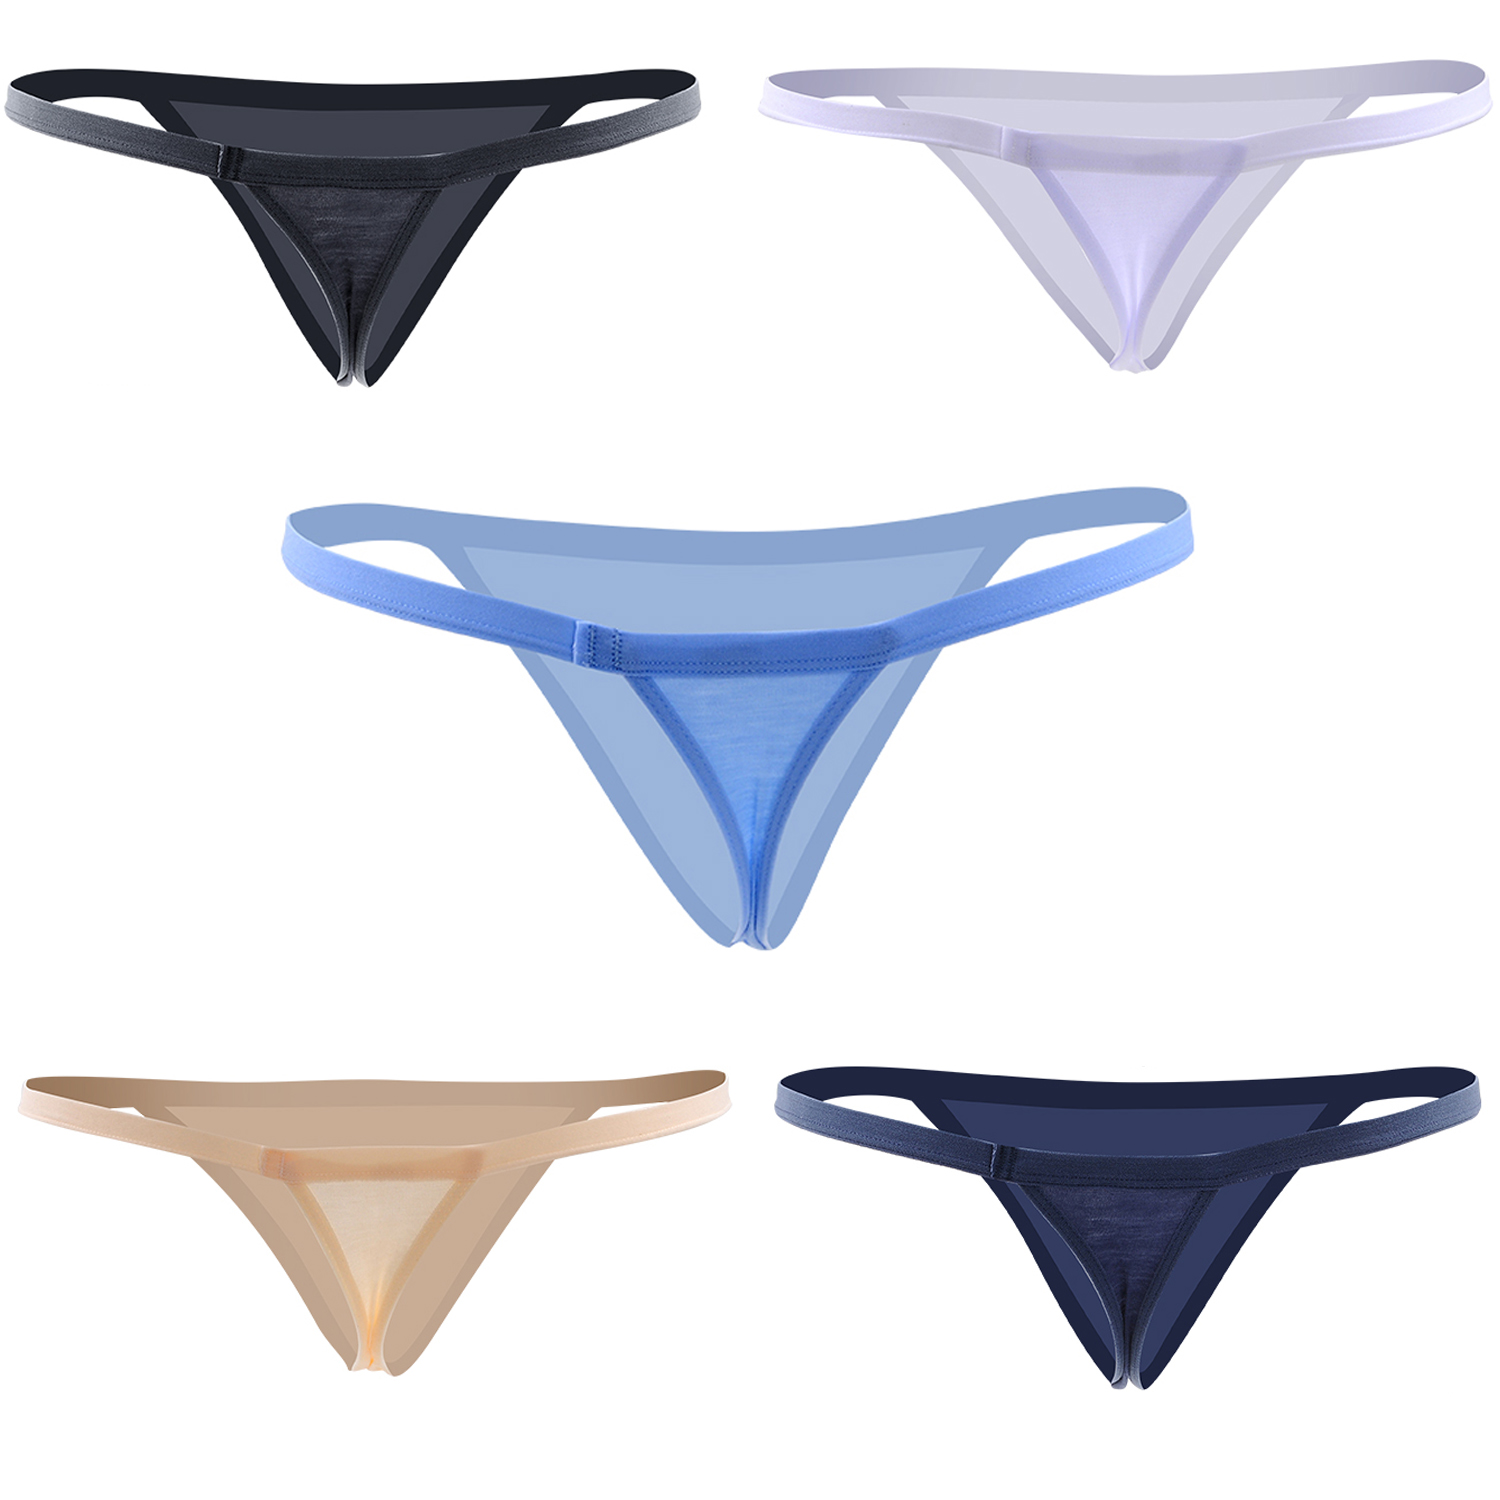 Buy Nightaste Women's G-String Panties Pack of 5 Cotton Thongs Underwear  with Color Stripes online